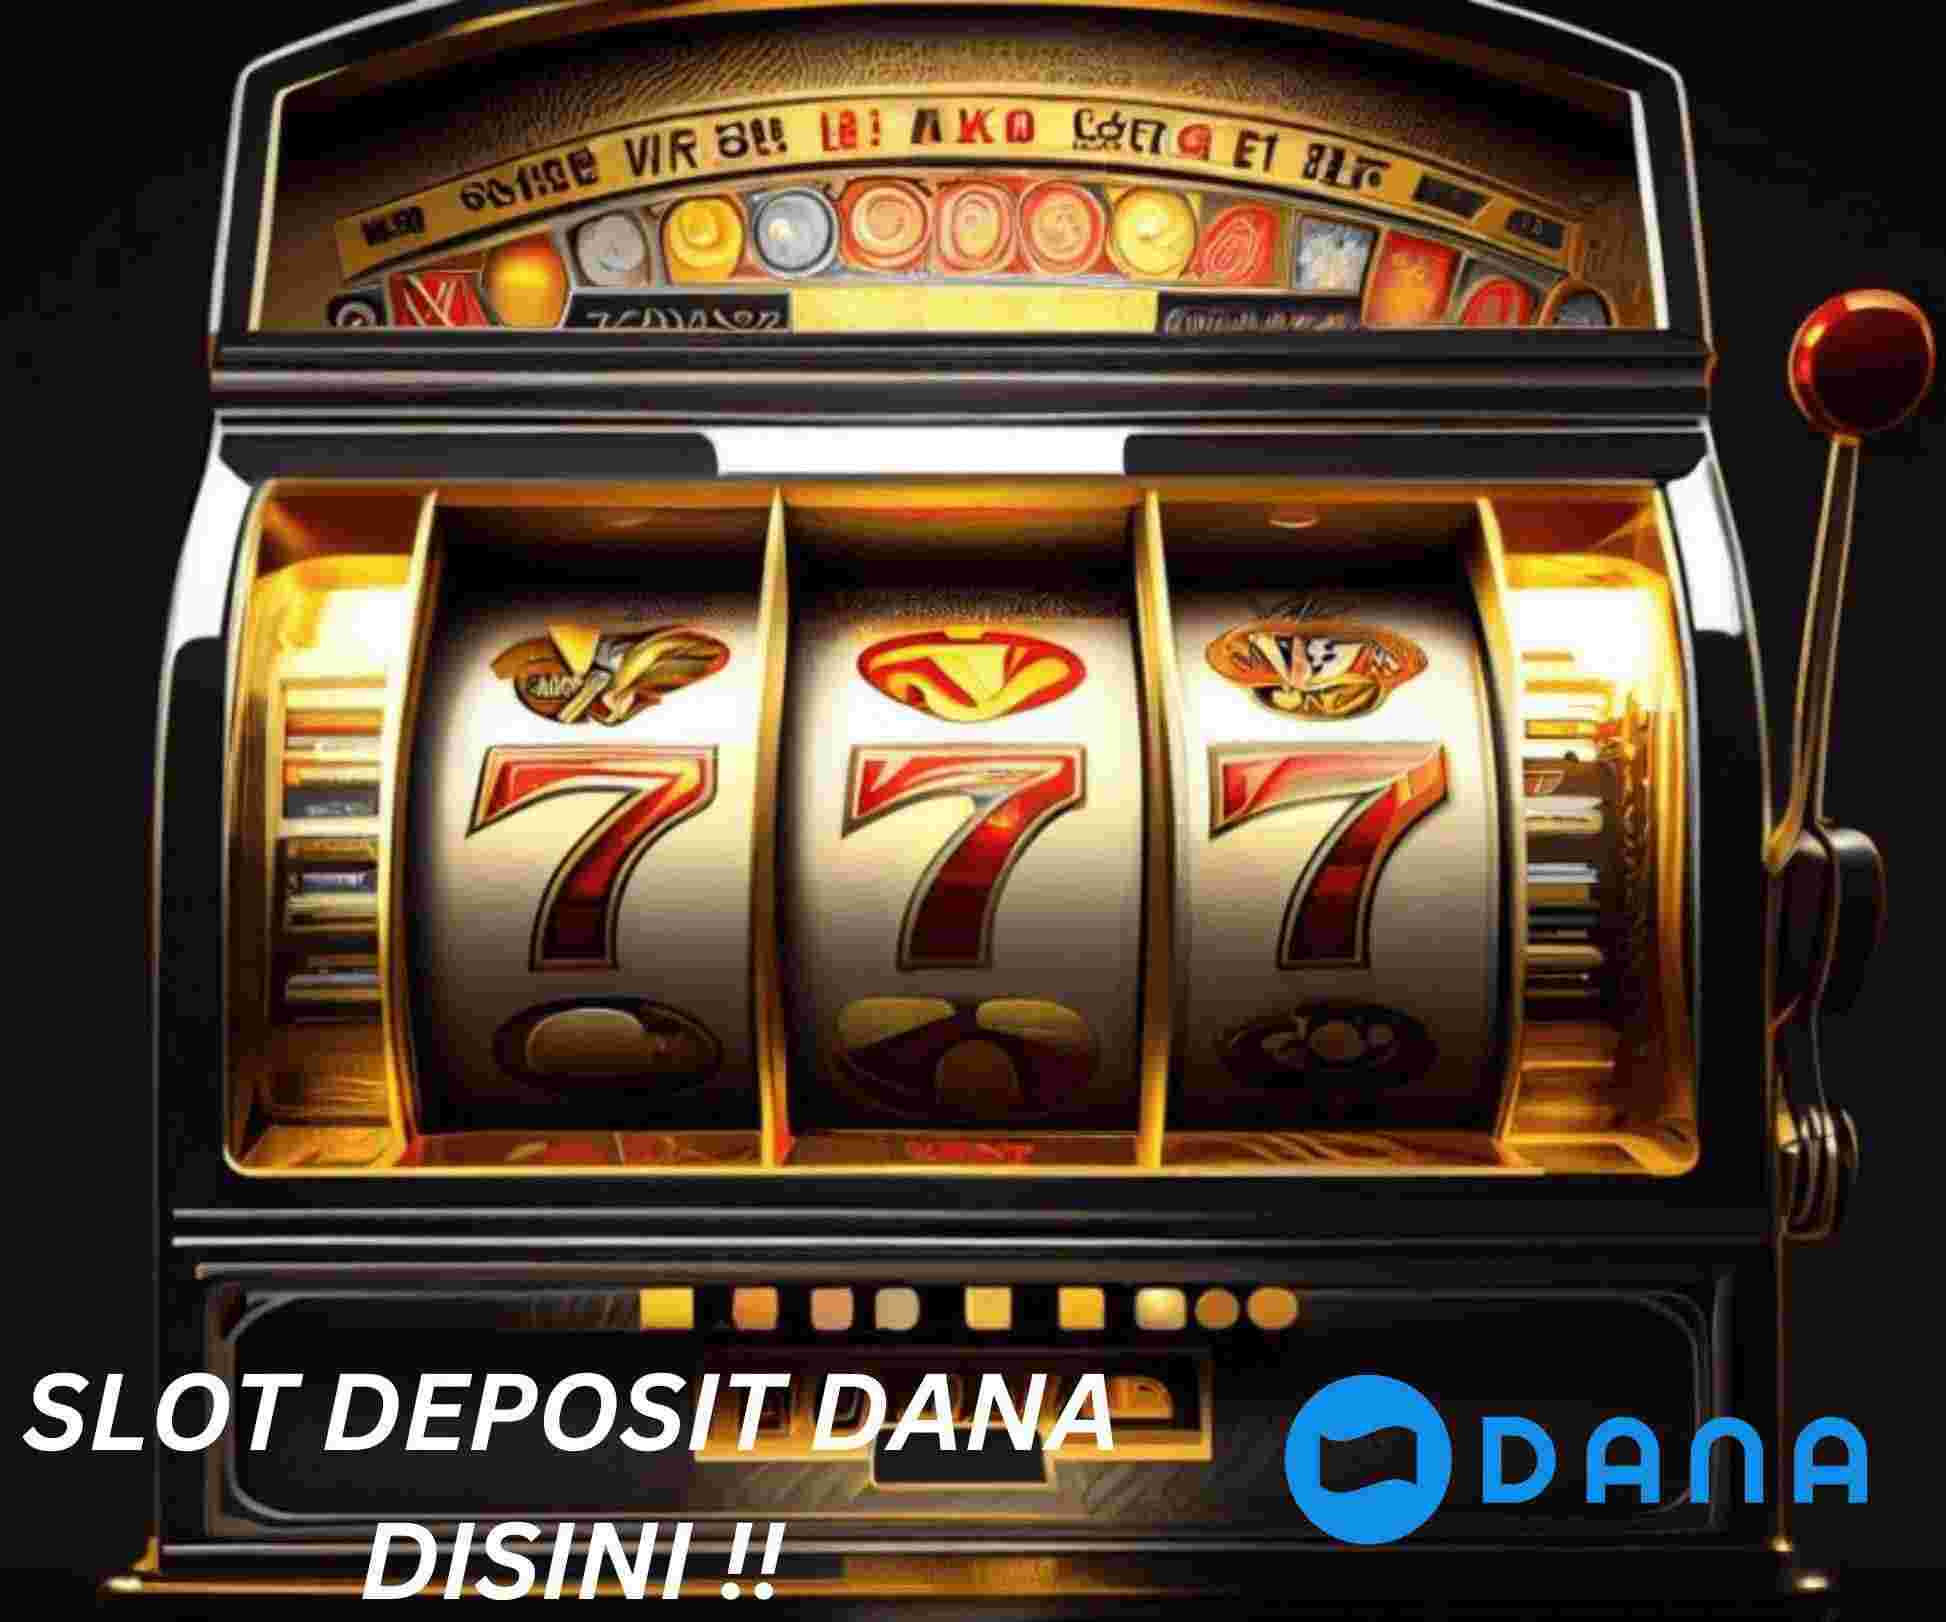 Slot dana is slot game using Indonesian Dana electronic money